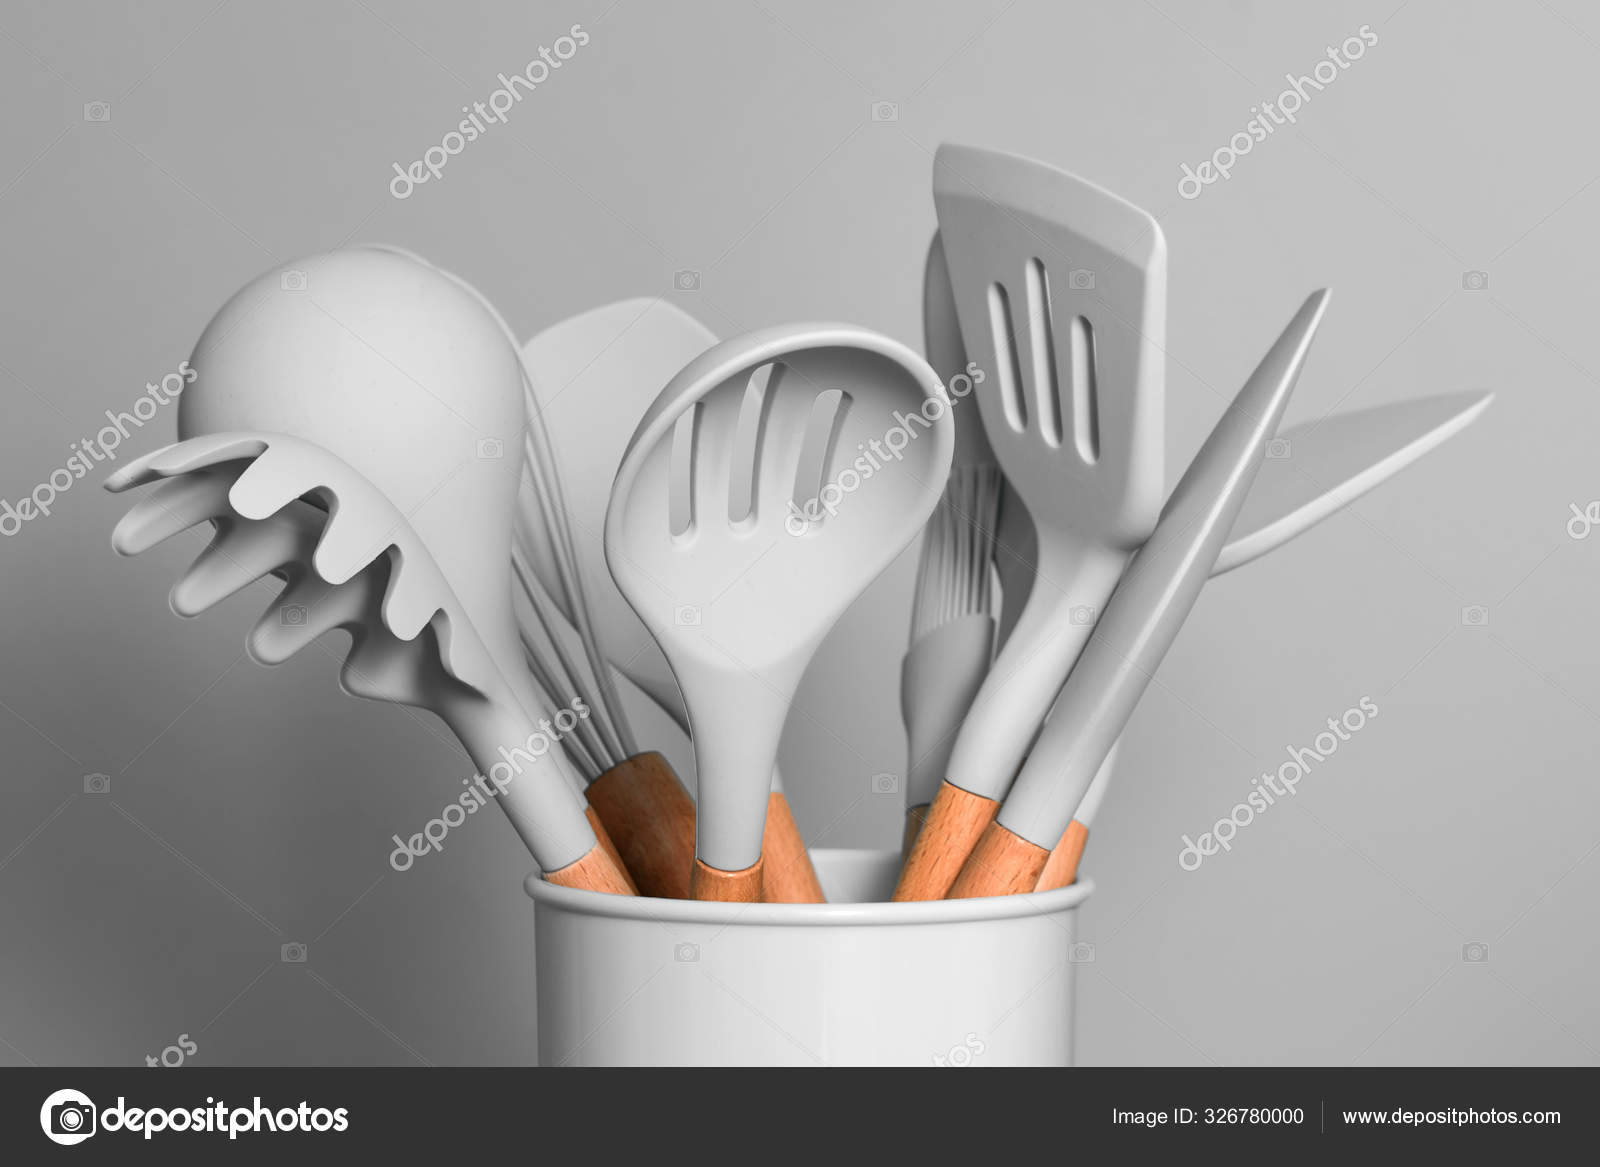 https://st3.depositphotos.com/2815743/32678/i/1600/depositphotos_326780000-stock-photo-kitchen-utensils-background-with-copyspace.jpg